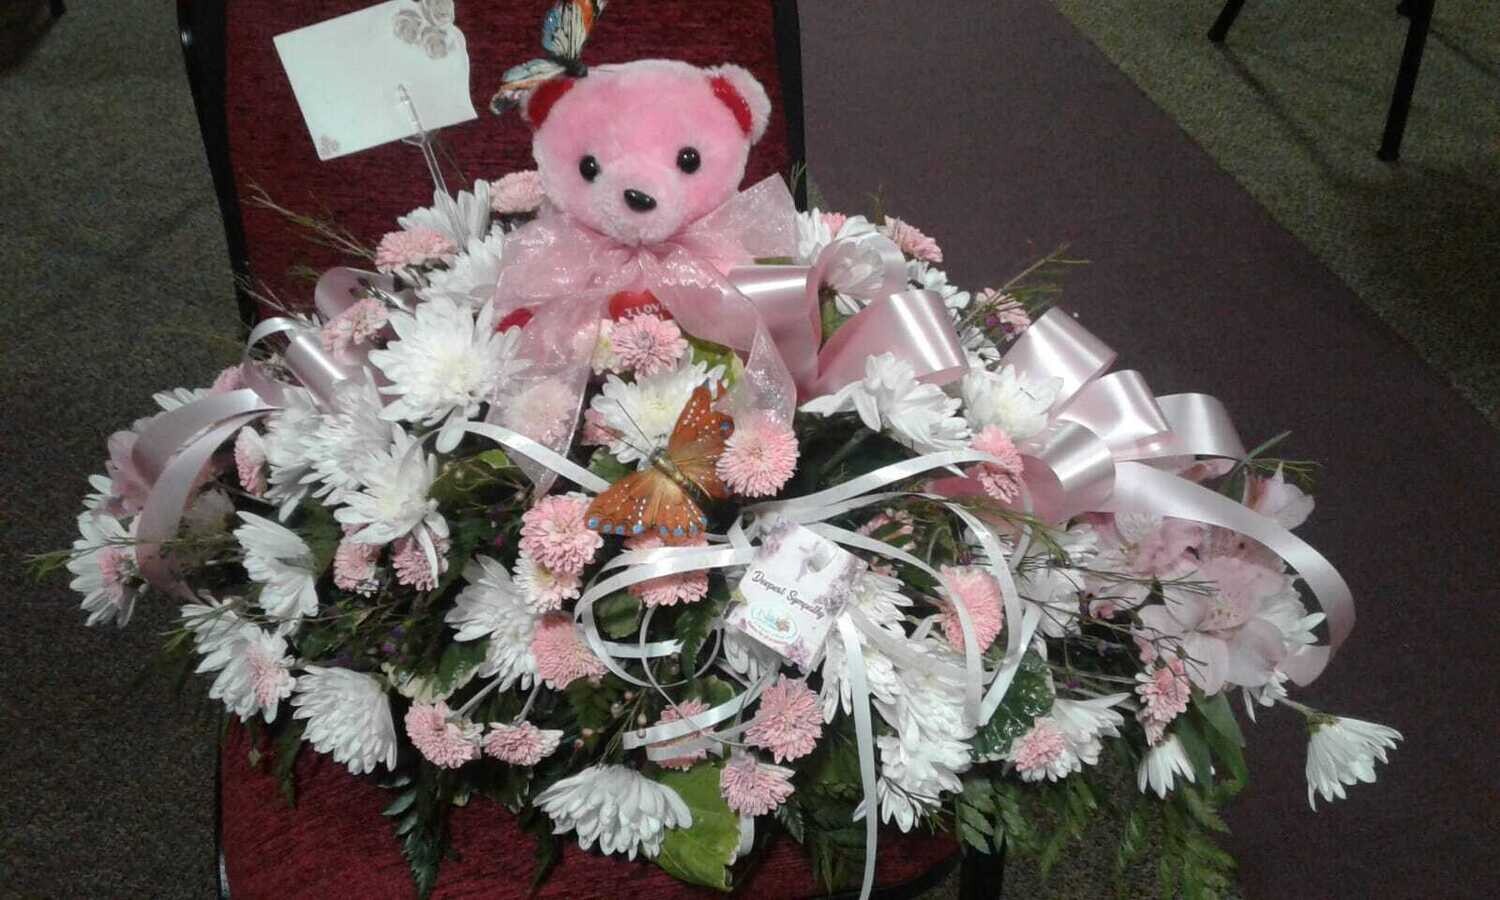 Wreath with Teddy Bear for a child